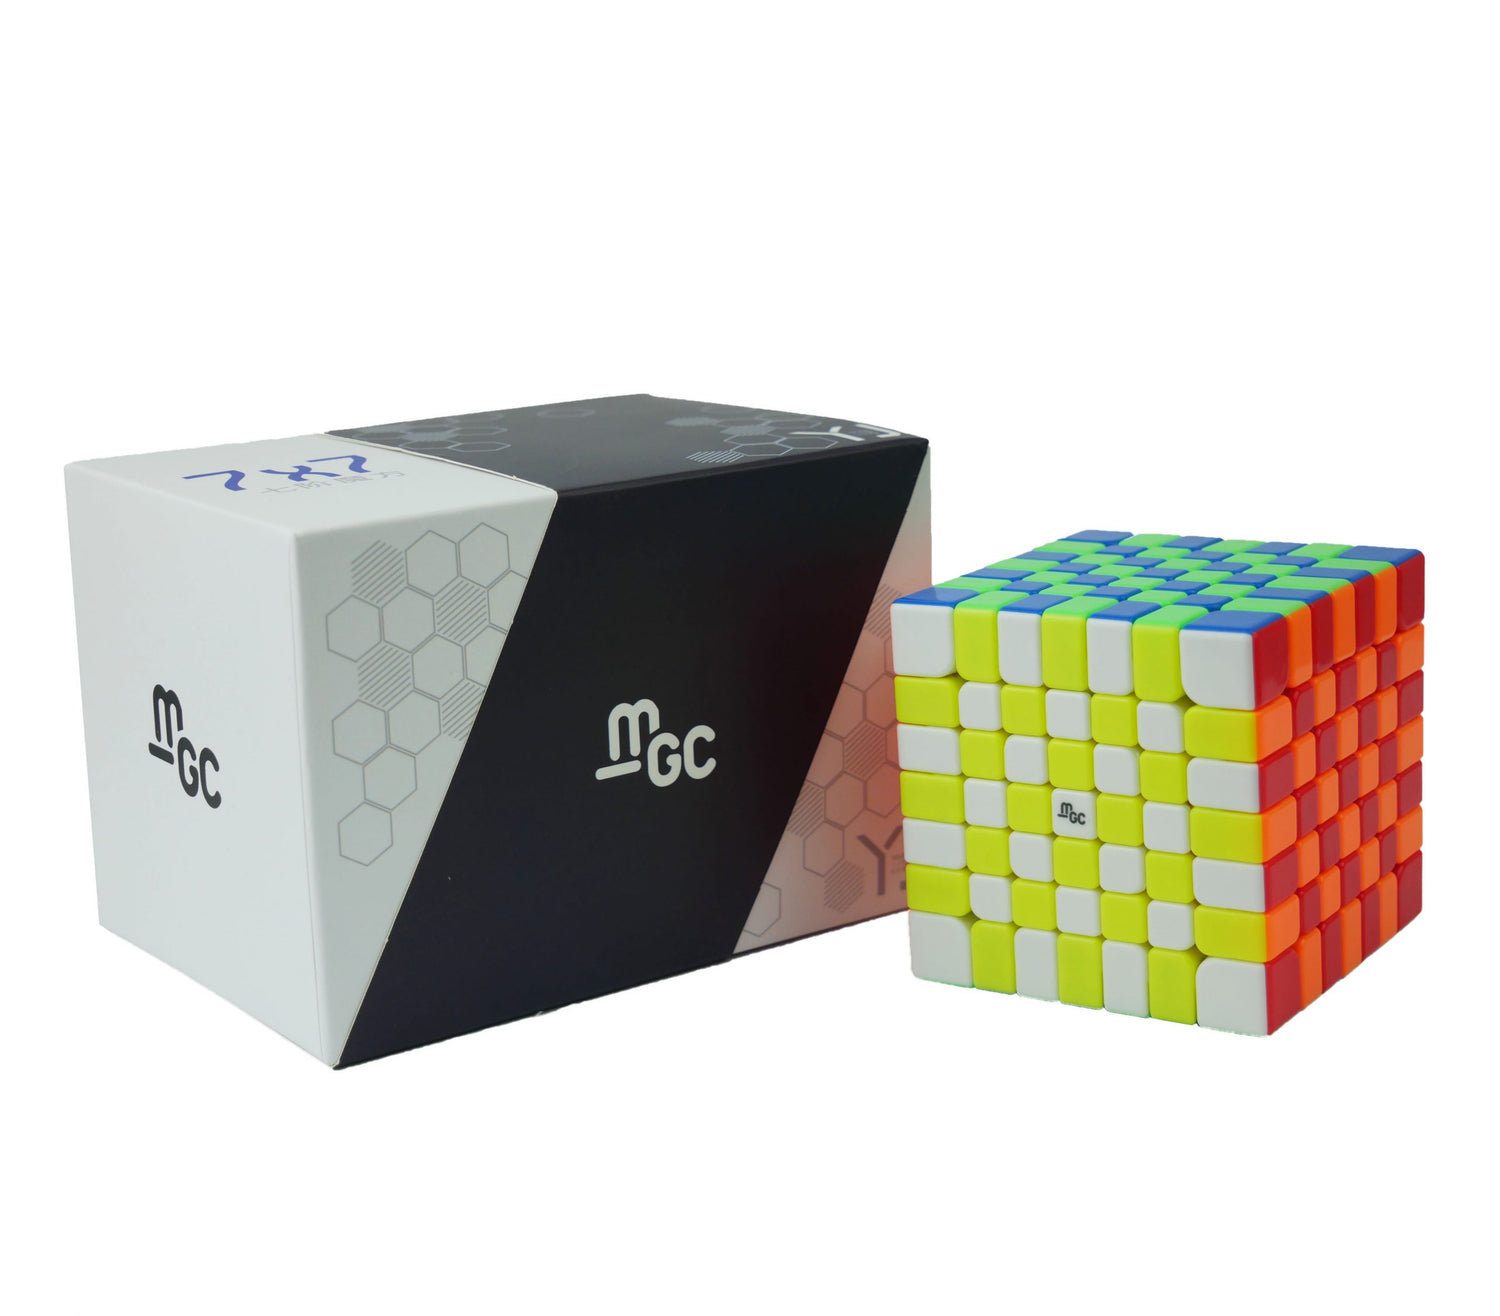 7x7 Rubik's Cube